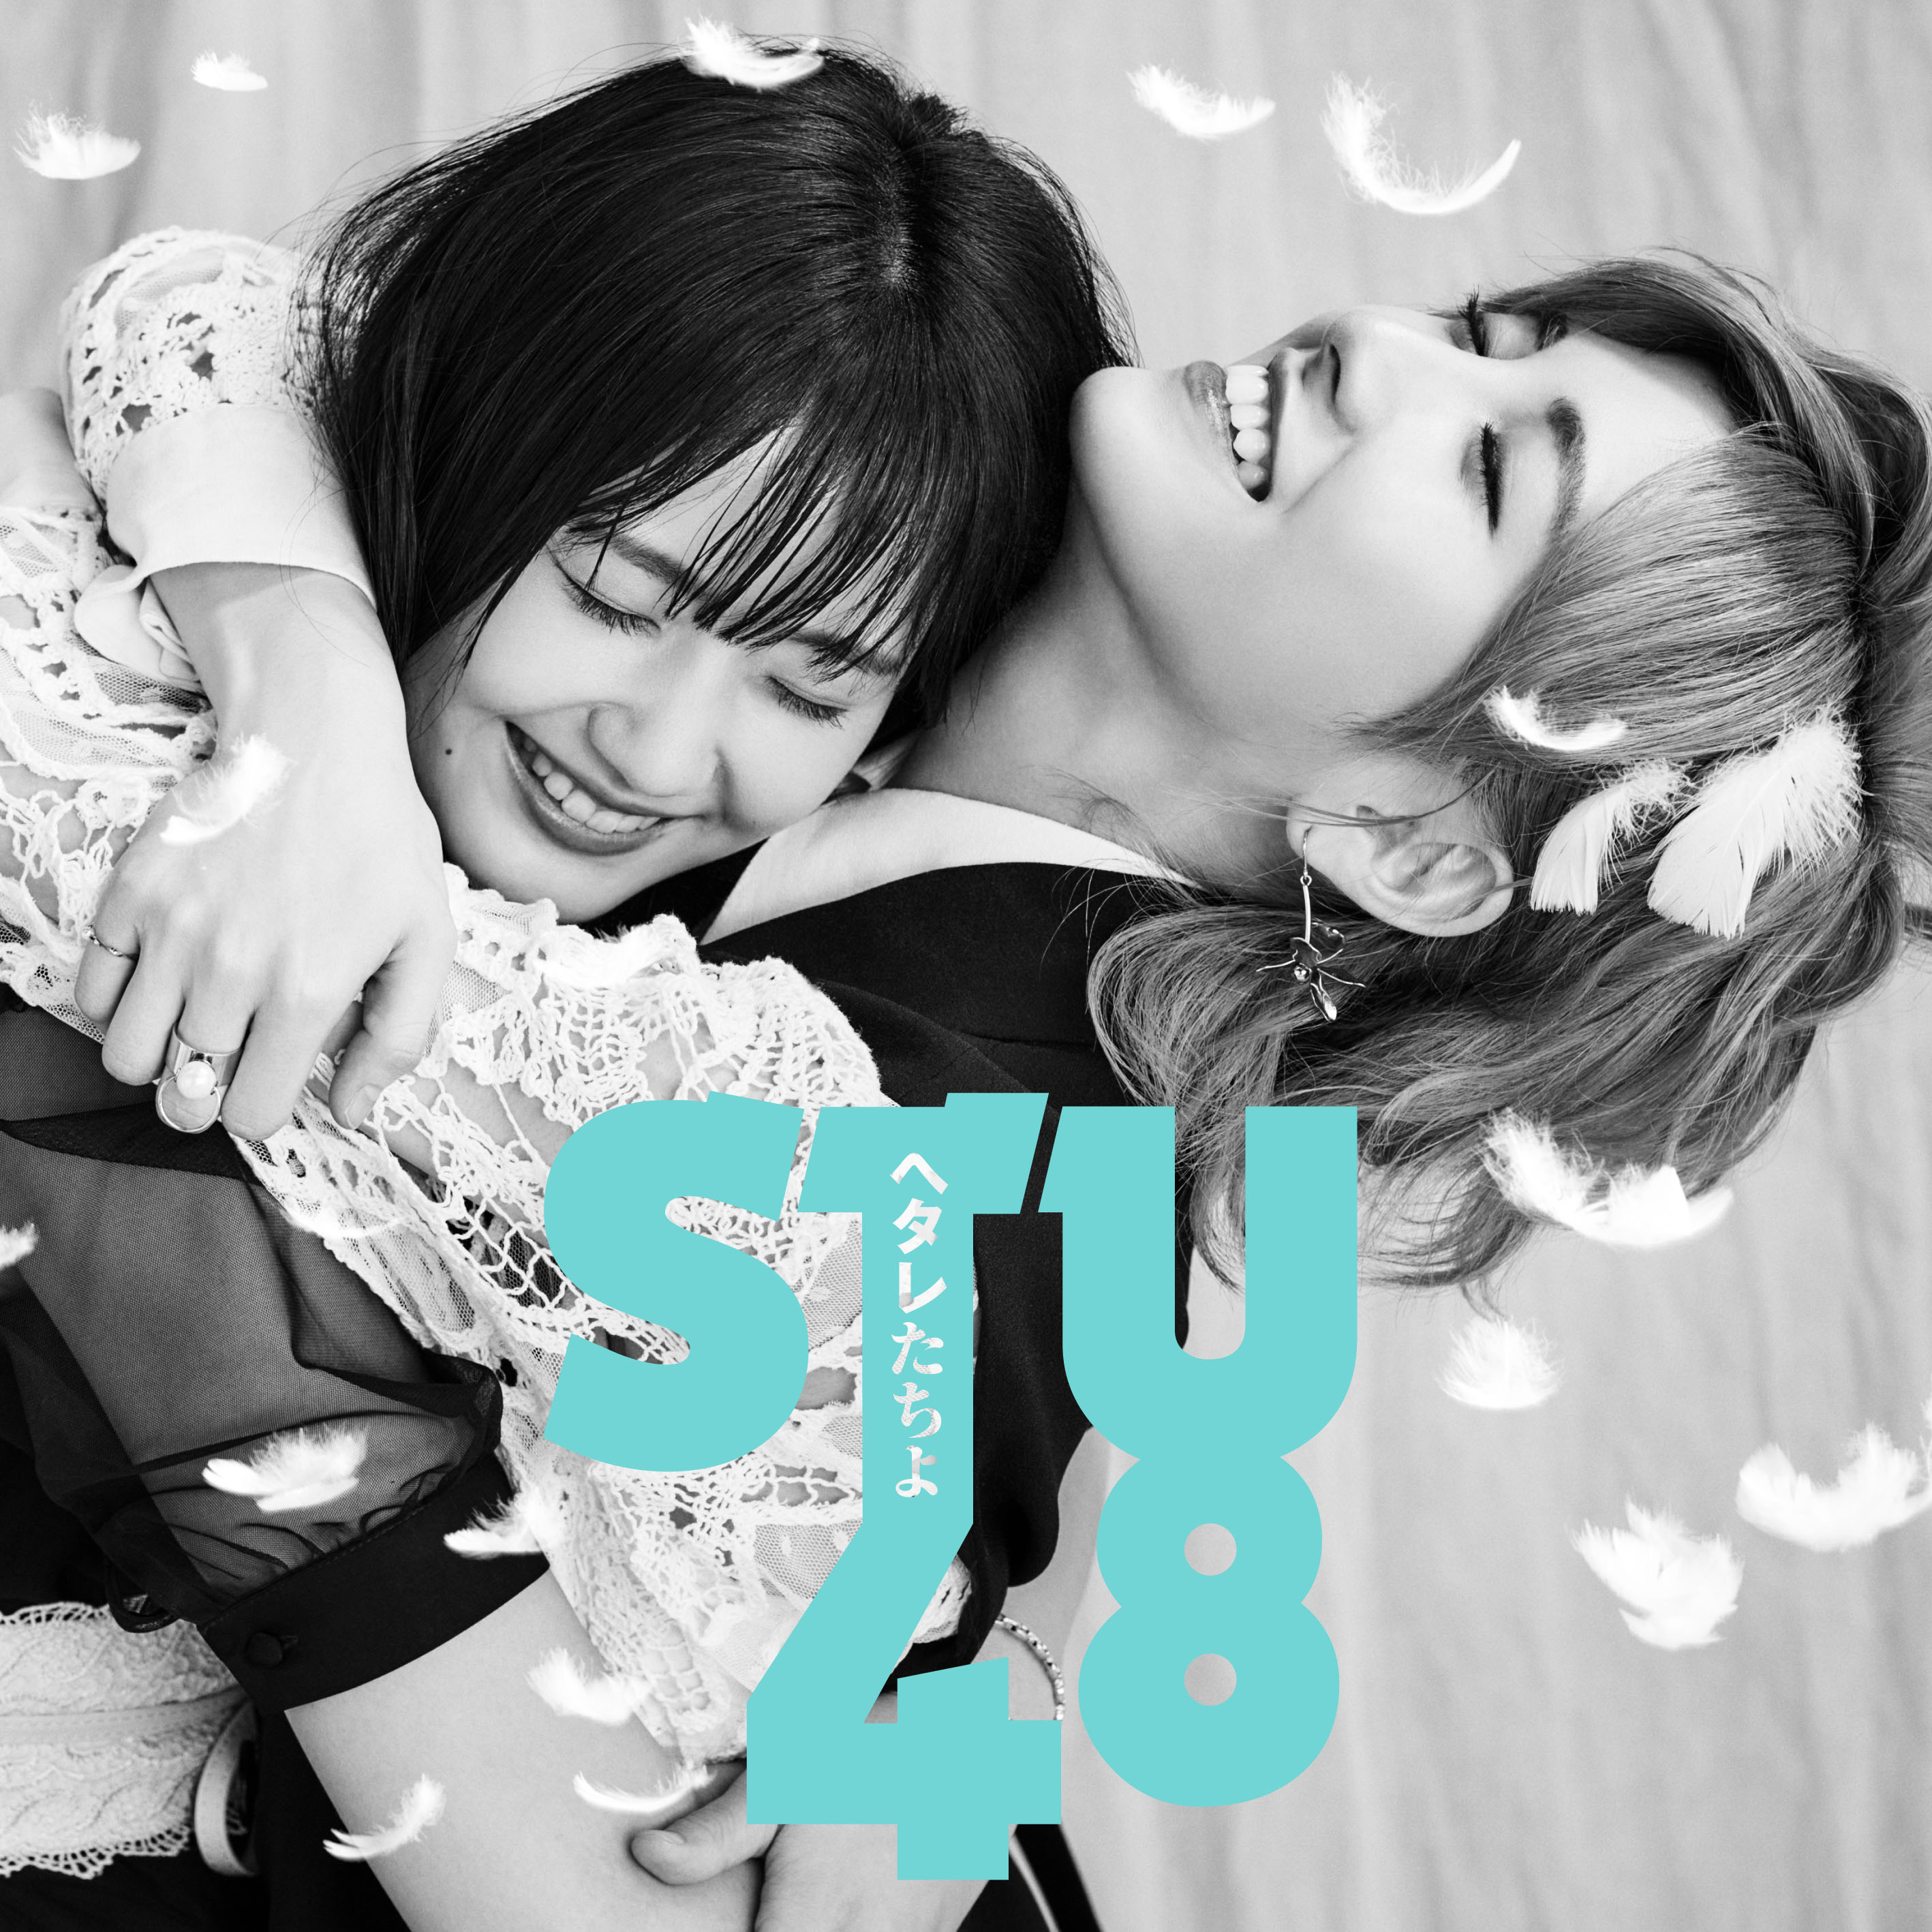 STU48 7thシングル「ヘタレたちよ」劇場盤CD